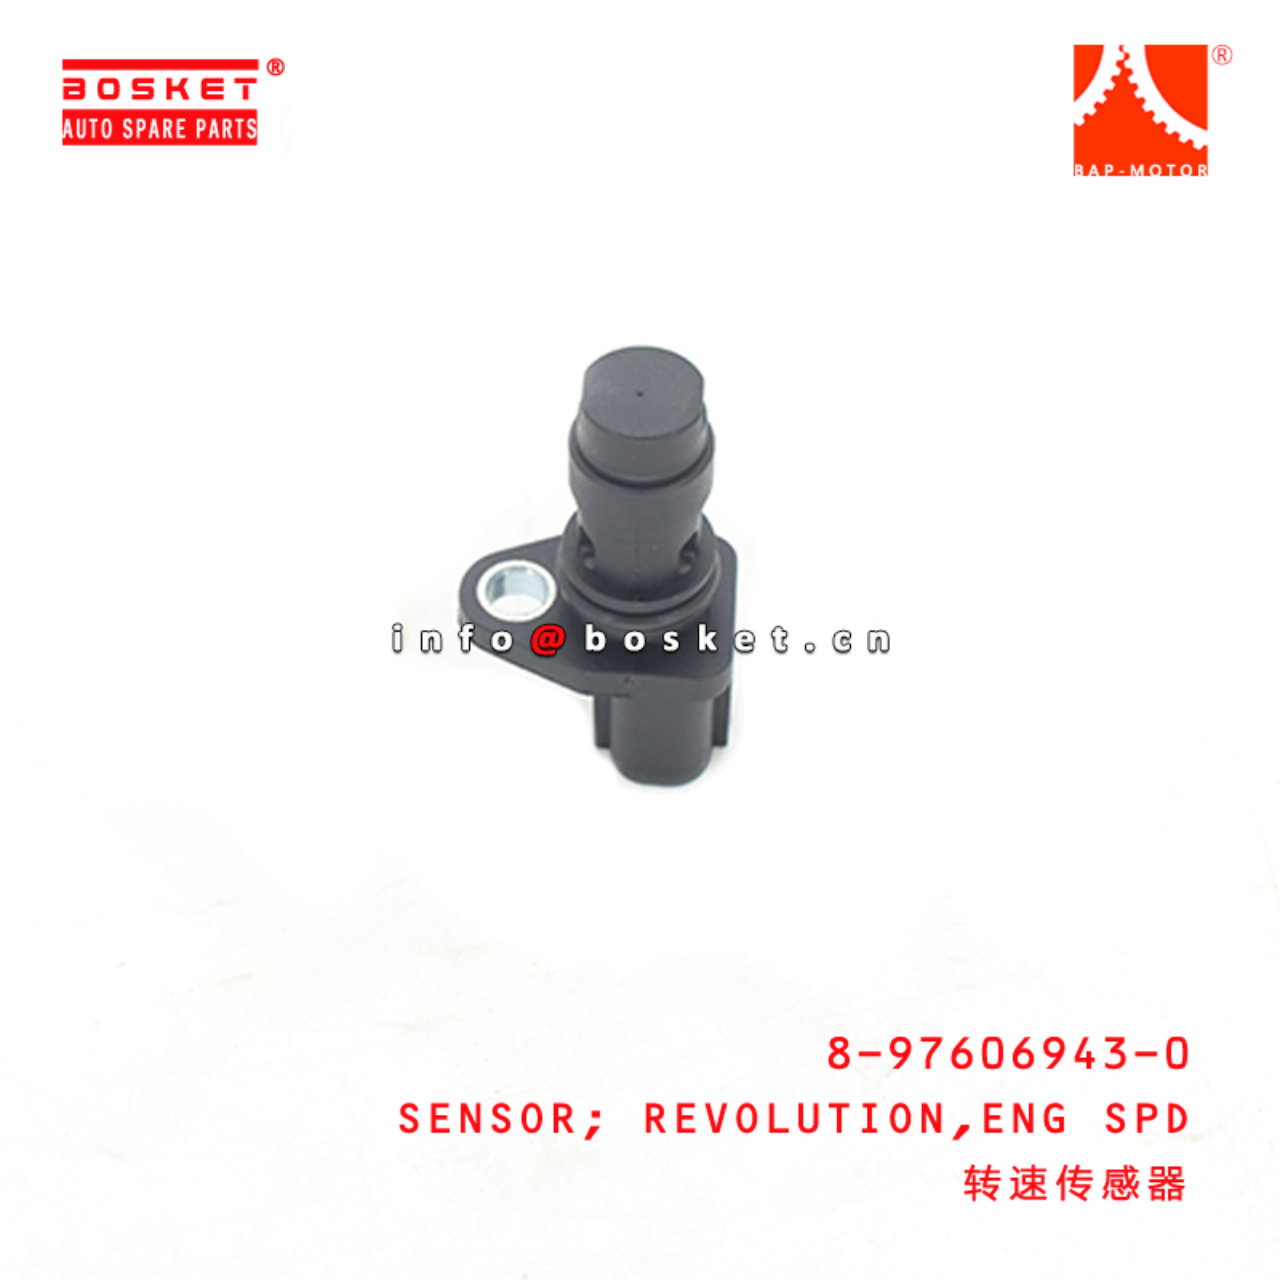 8-97606943-0 Engine Speed Revolution Sensor 8976069430 Suitable for ISUZU ELF 4HK1 